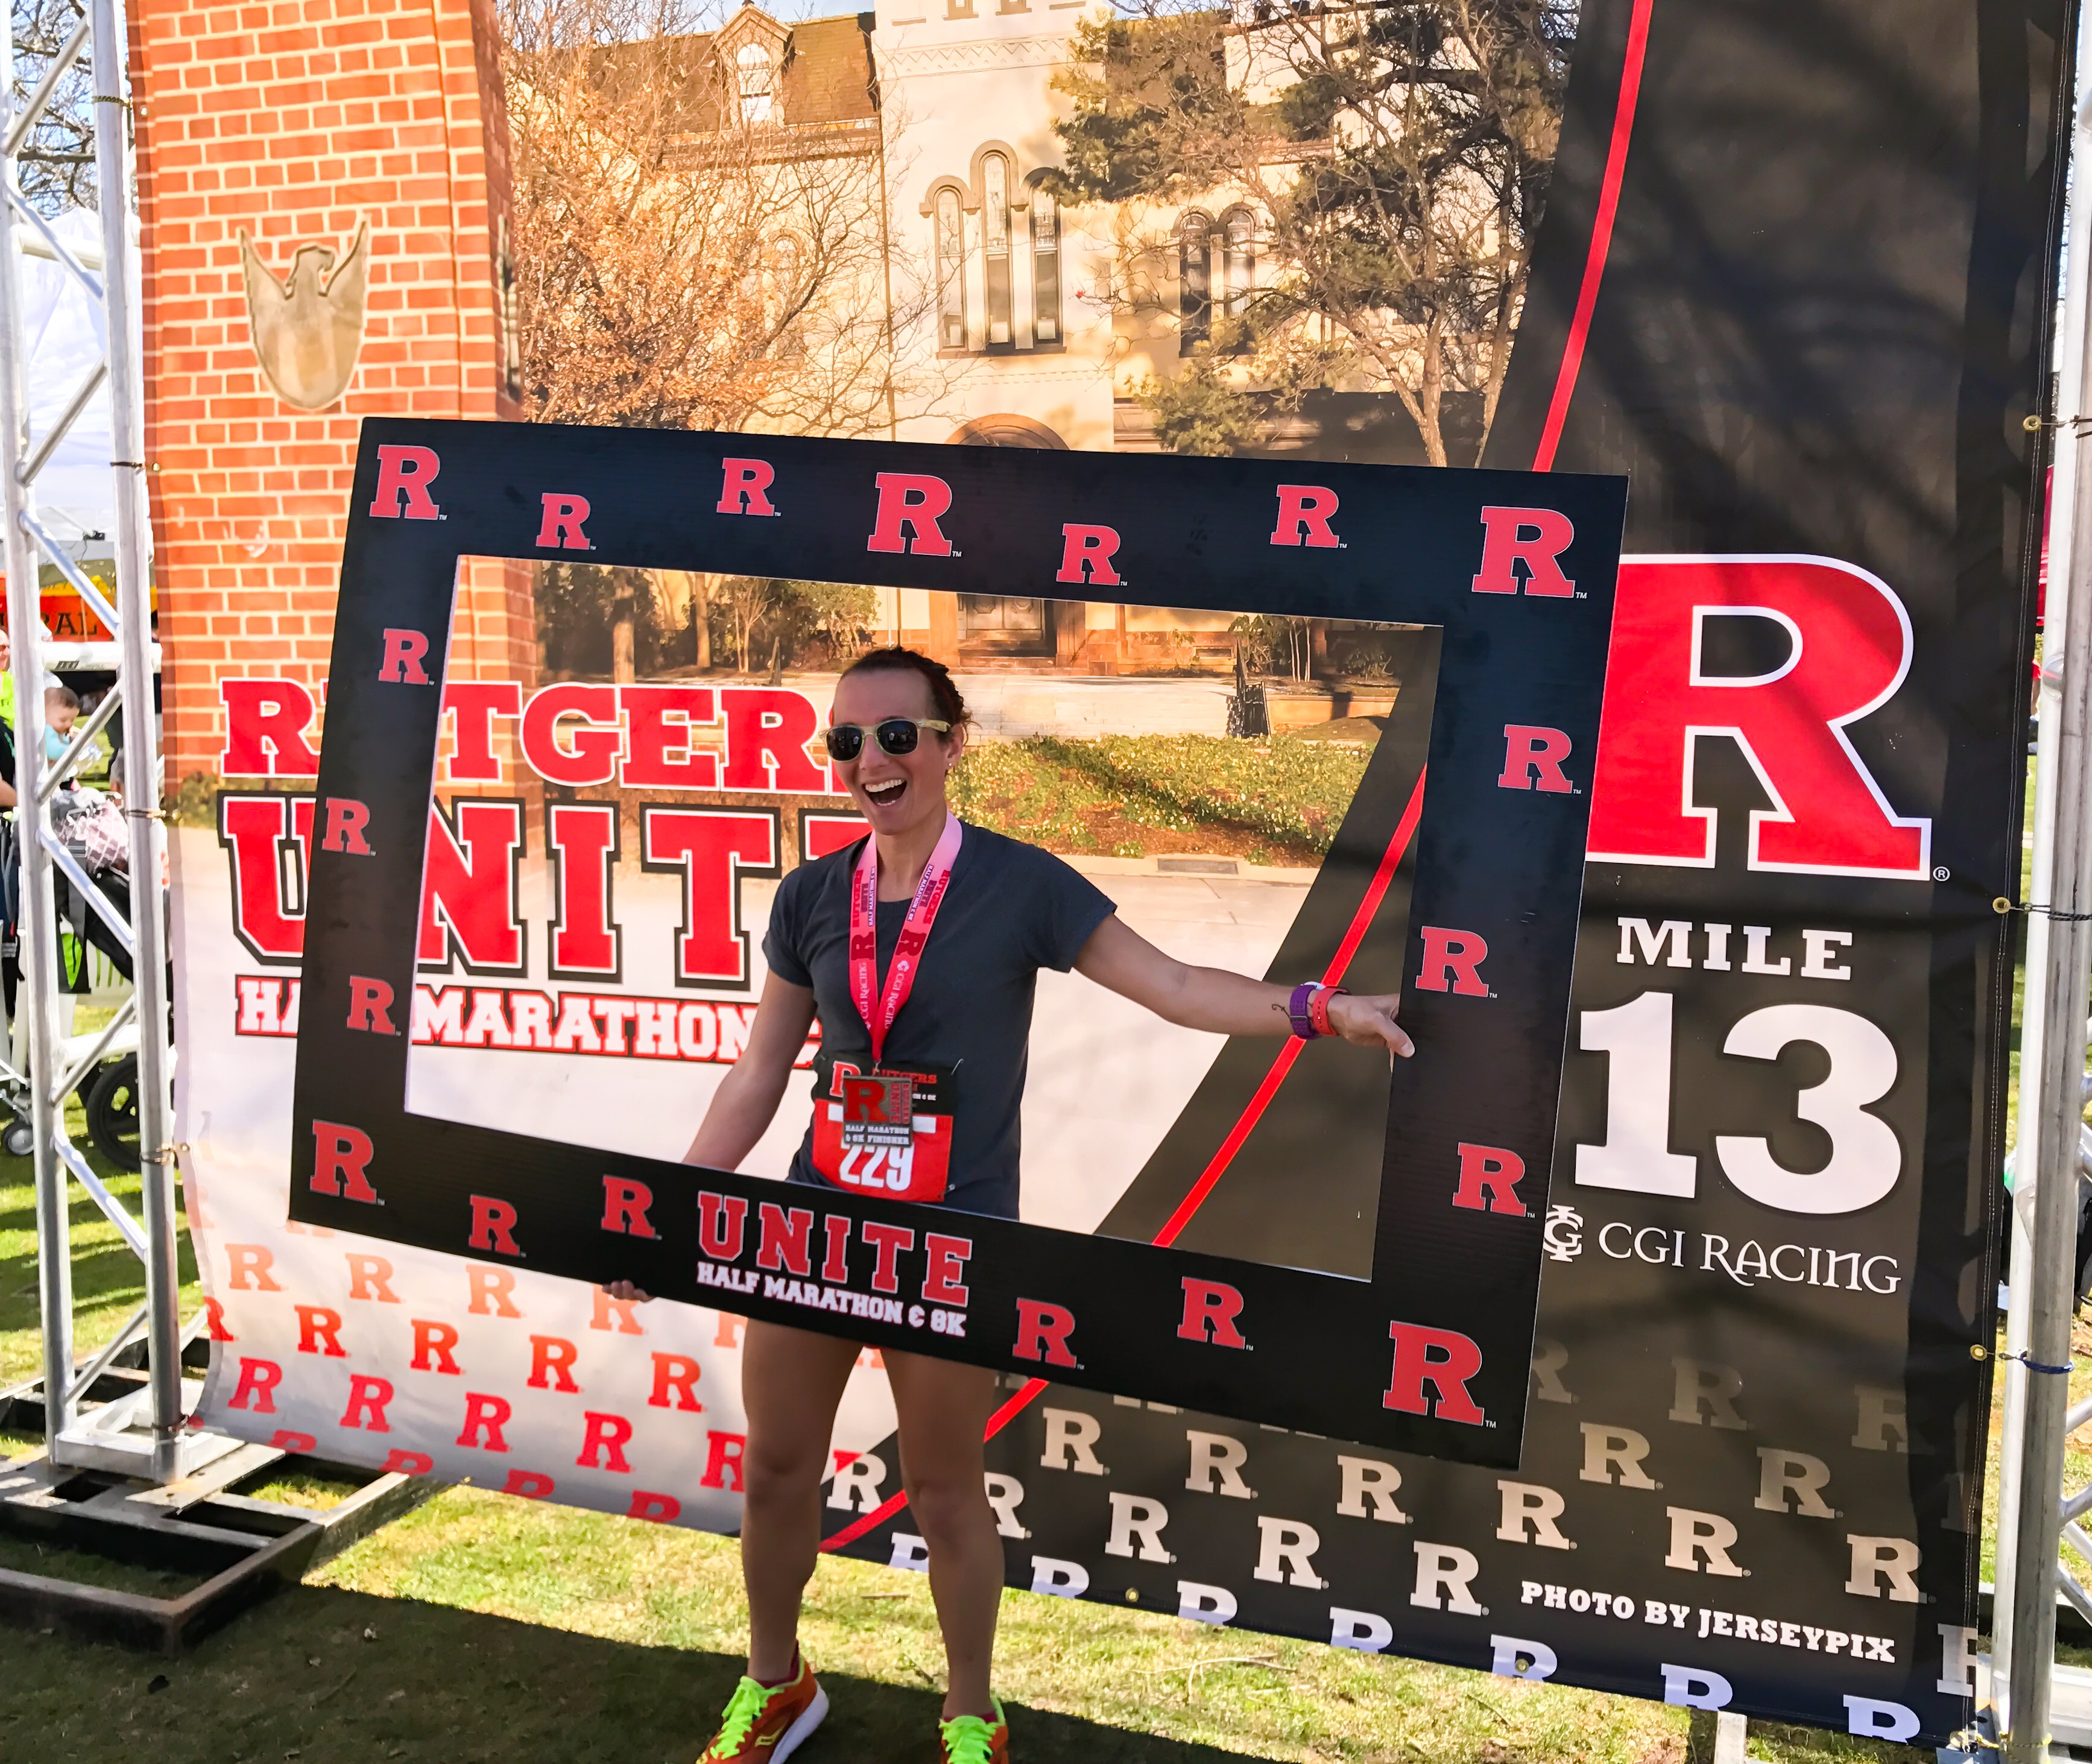 Rutgers Unite Half Marathon post race